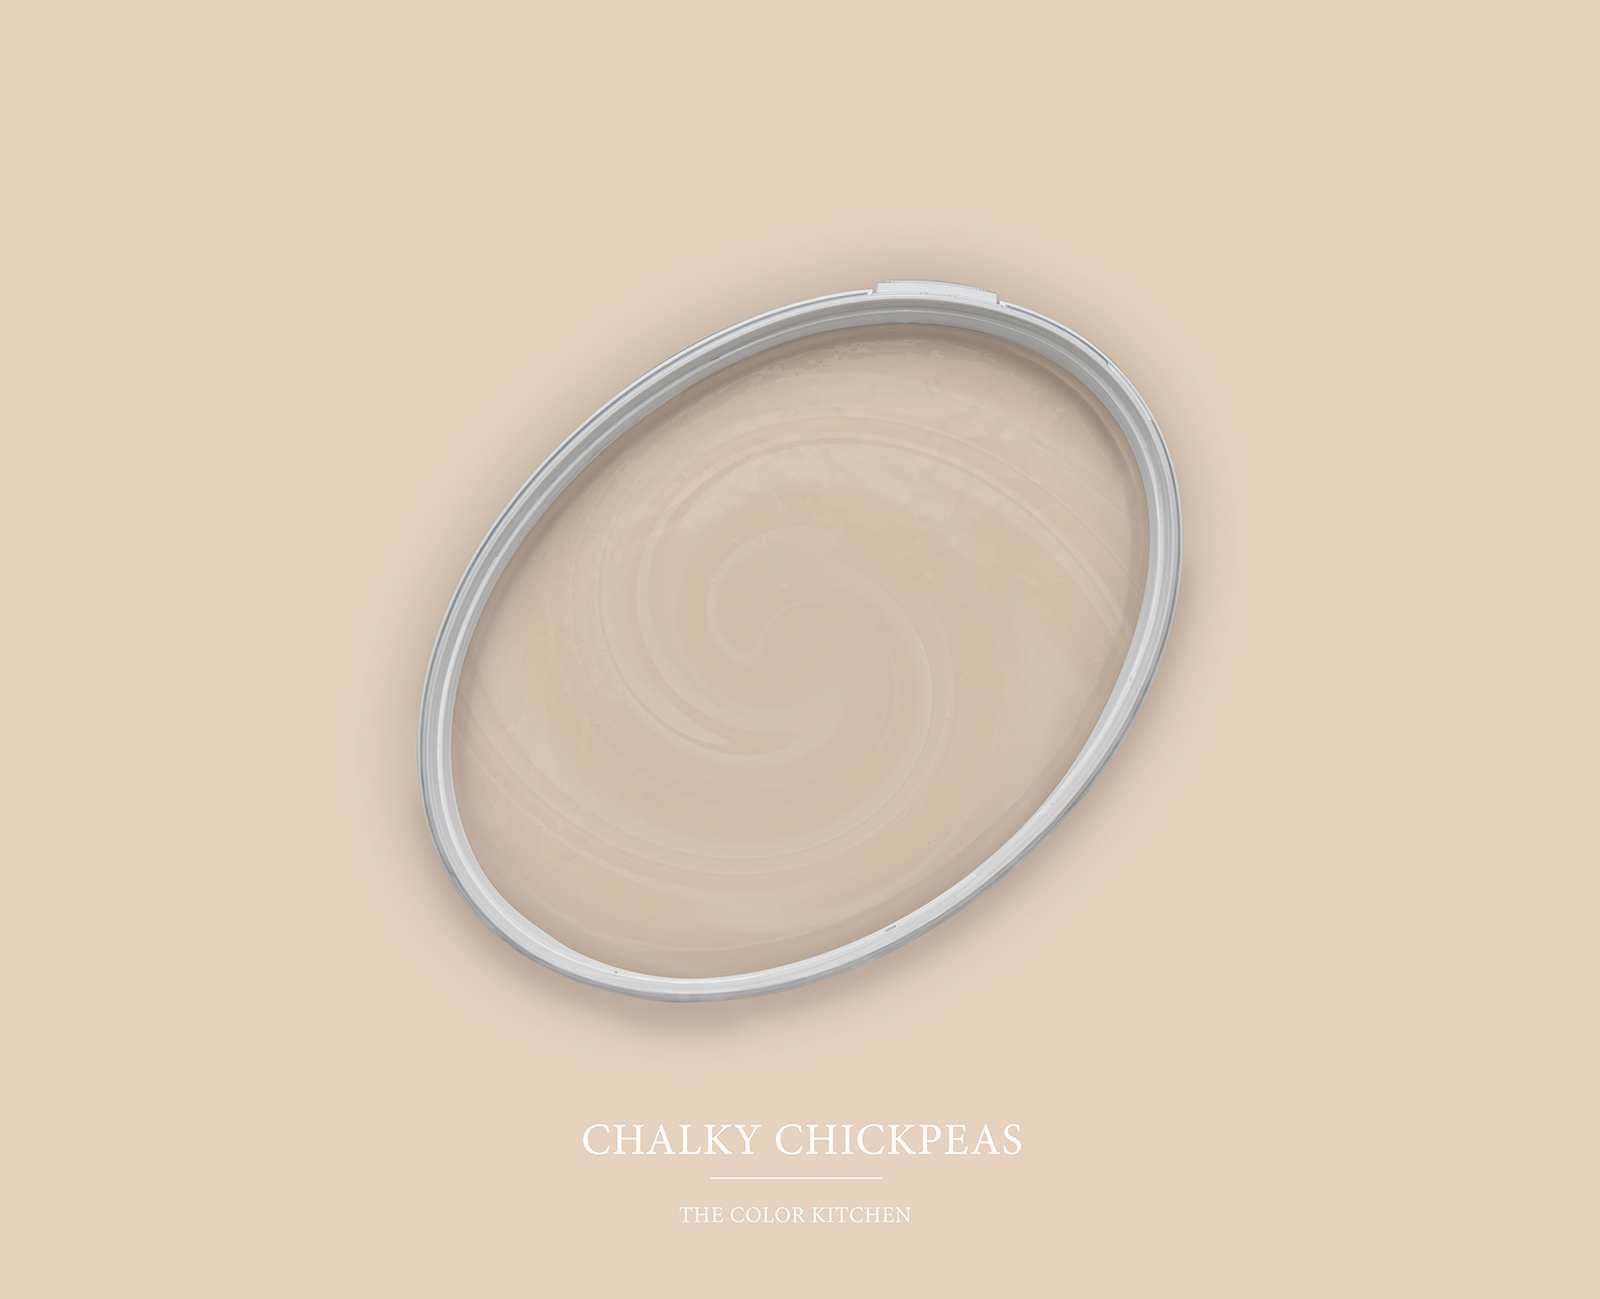         Wall Paint TCK6020 »Chalky Chickpeas« in fresh light beige – 2.5 litre
    